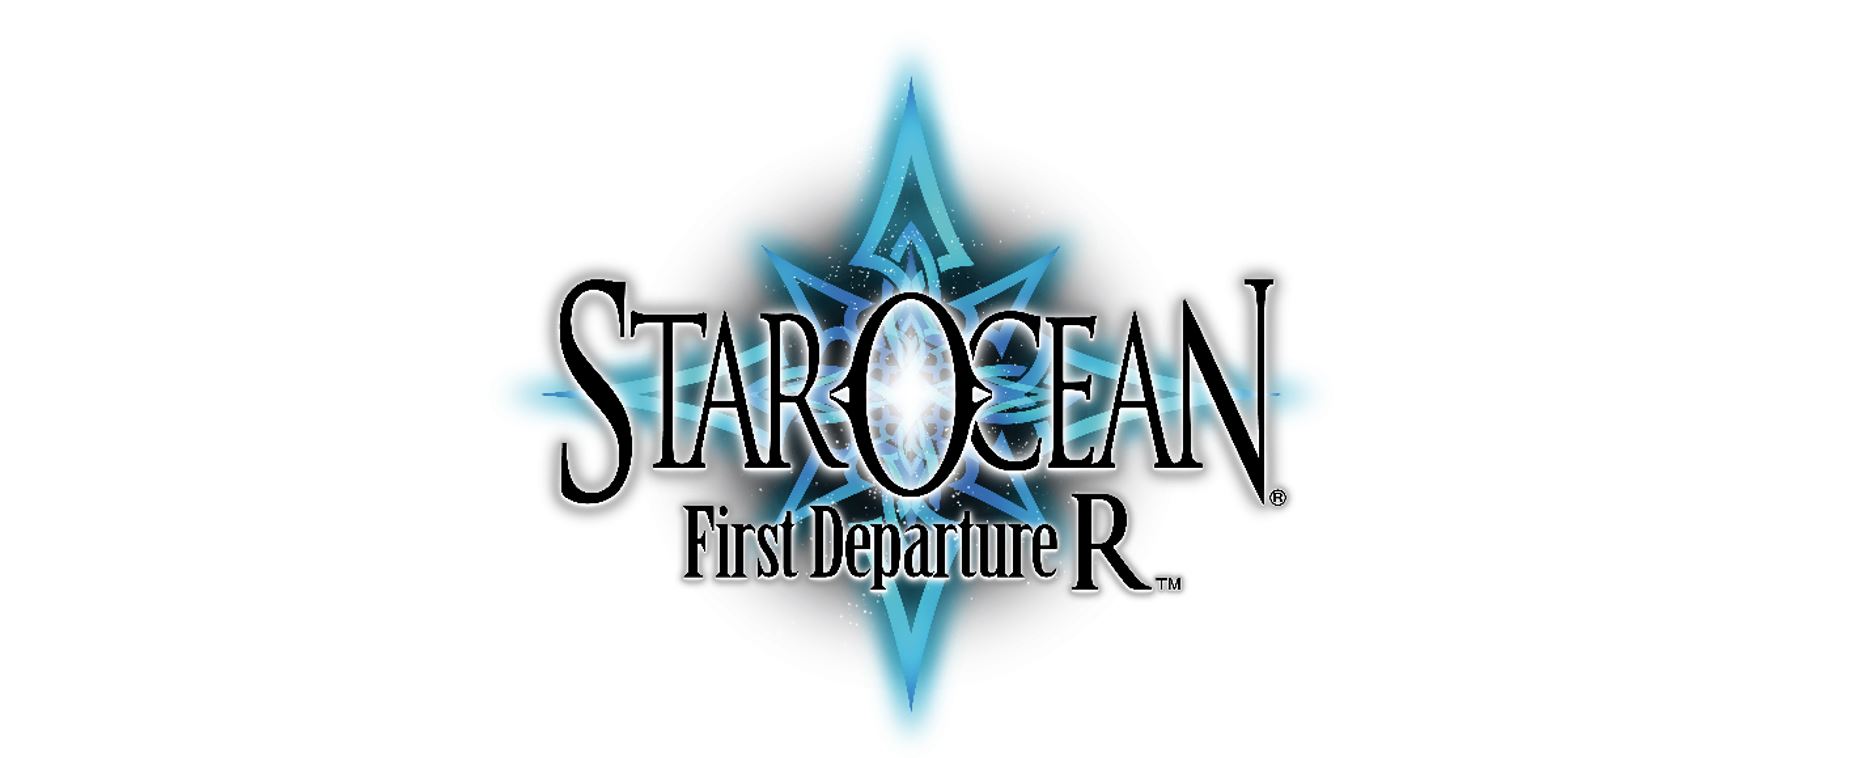 star ocean first departure